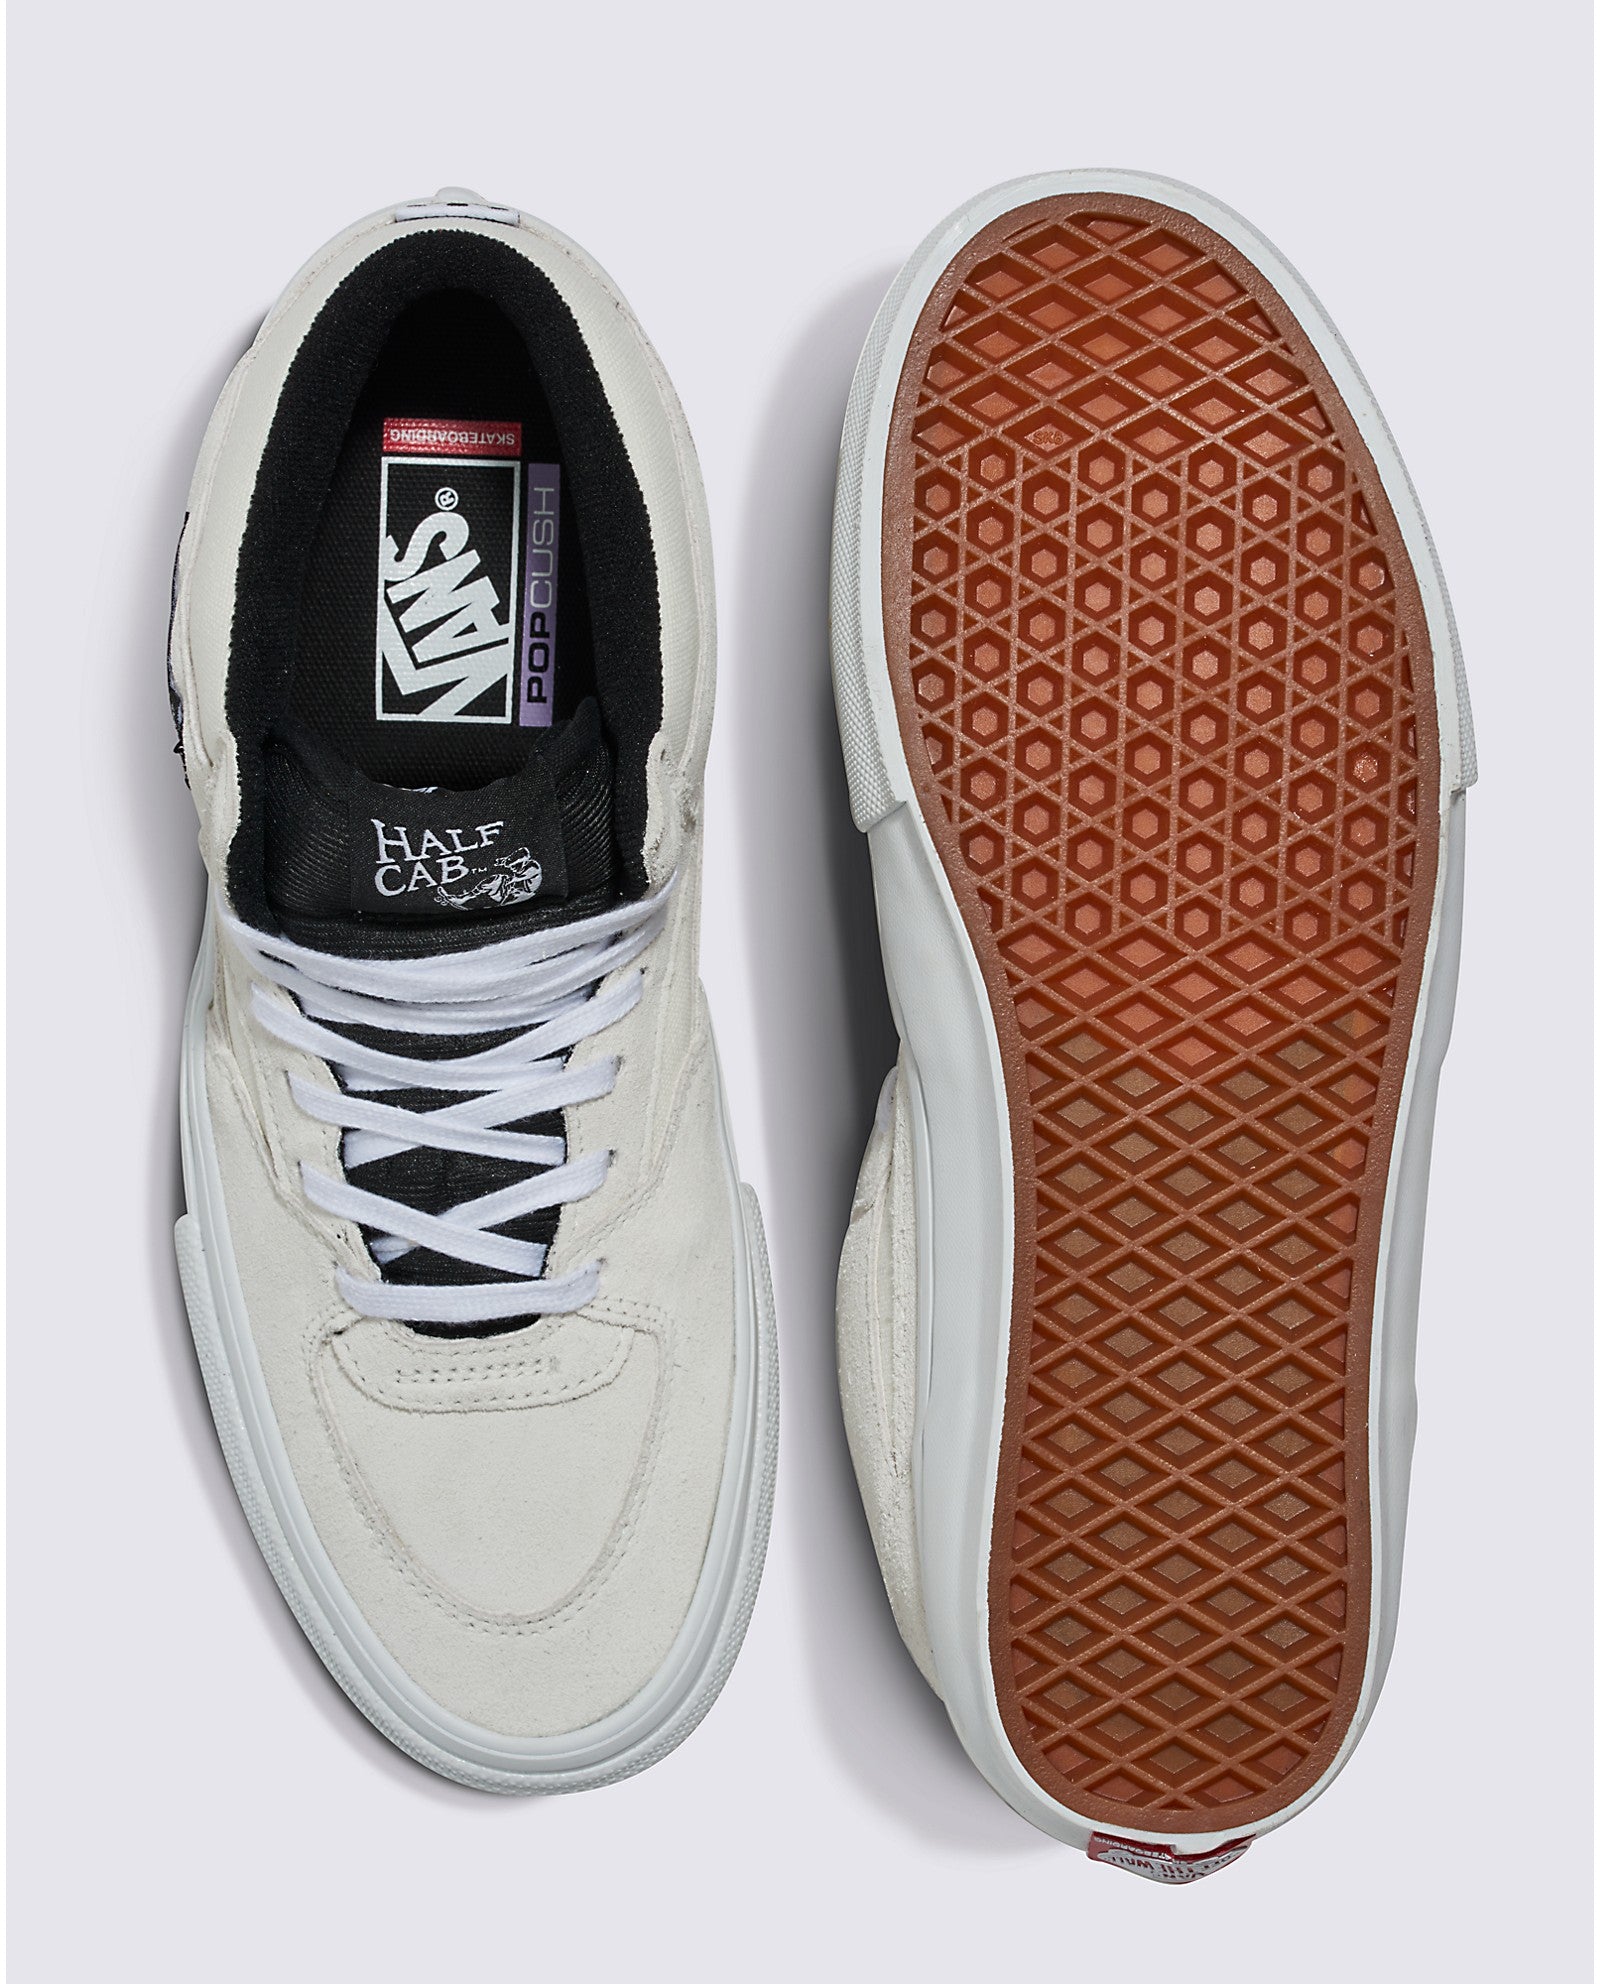 White/Black Vans Skate Half Cab Skate Shoe Top/Bottom